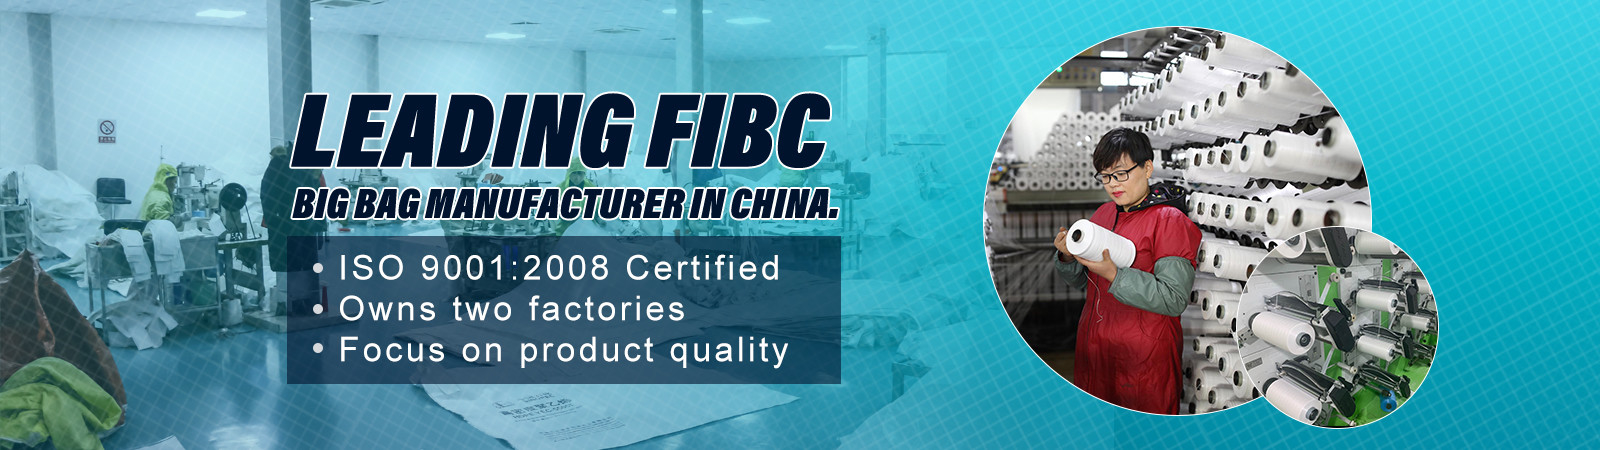 Qualität Big Bag FIBC usine